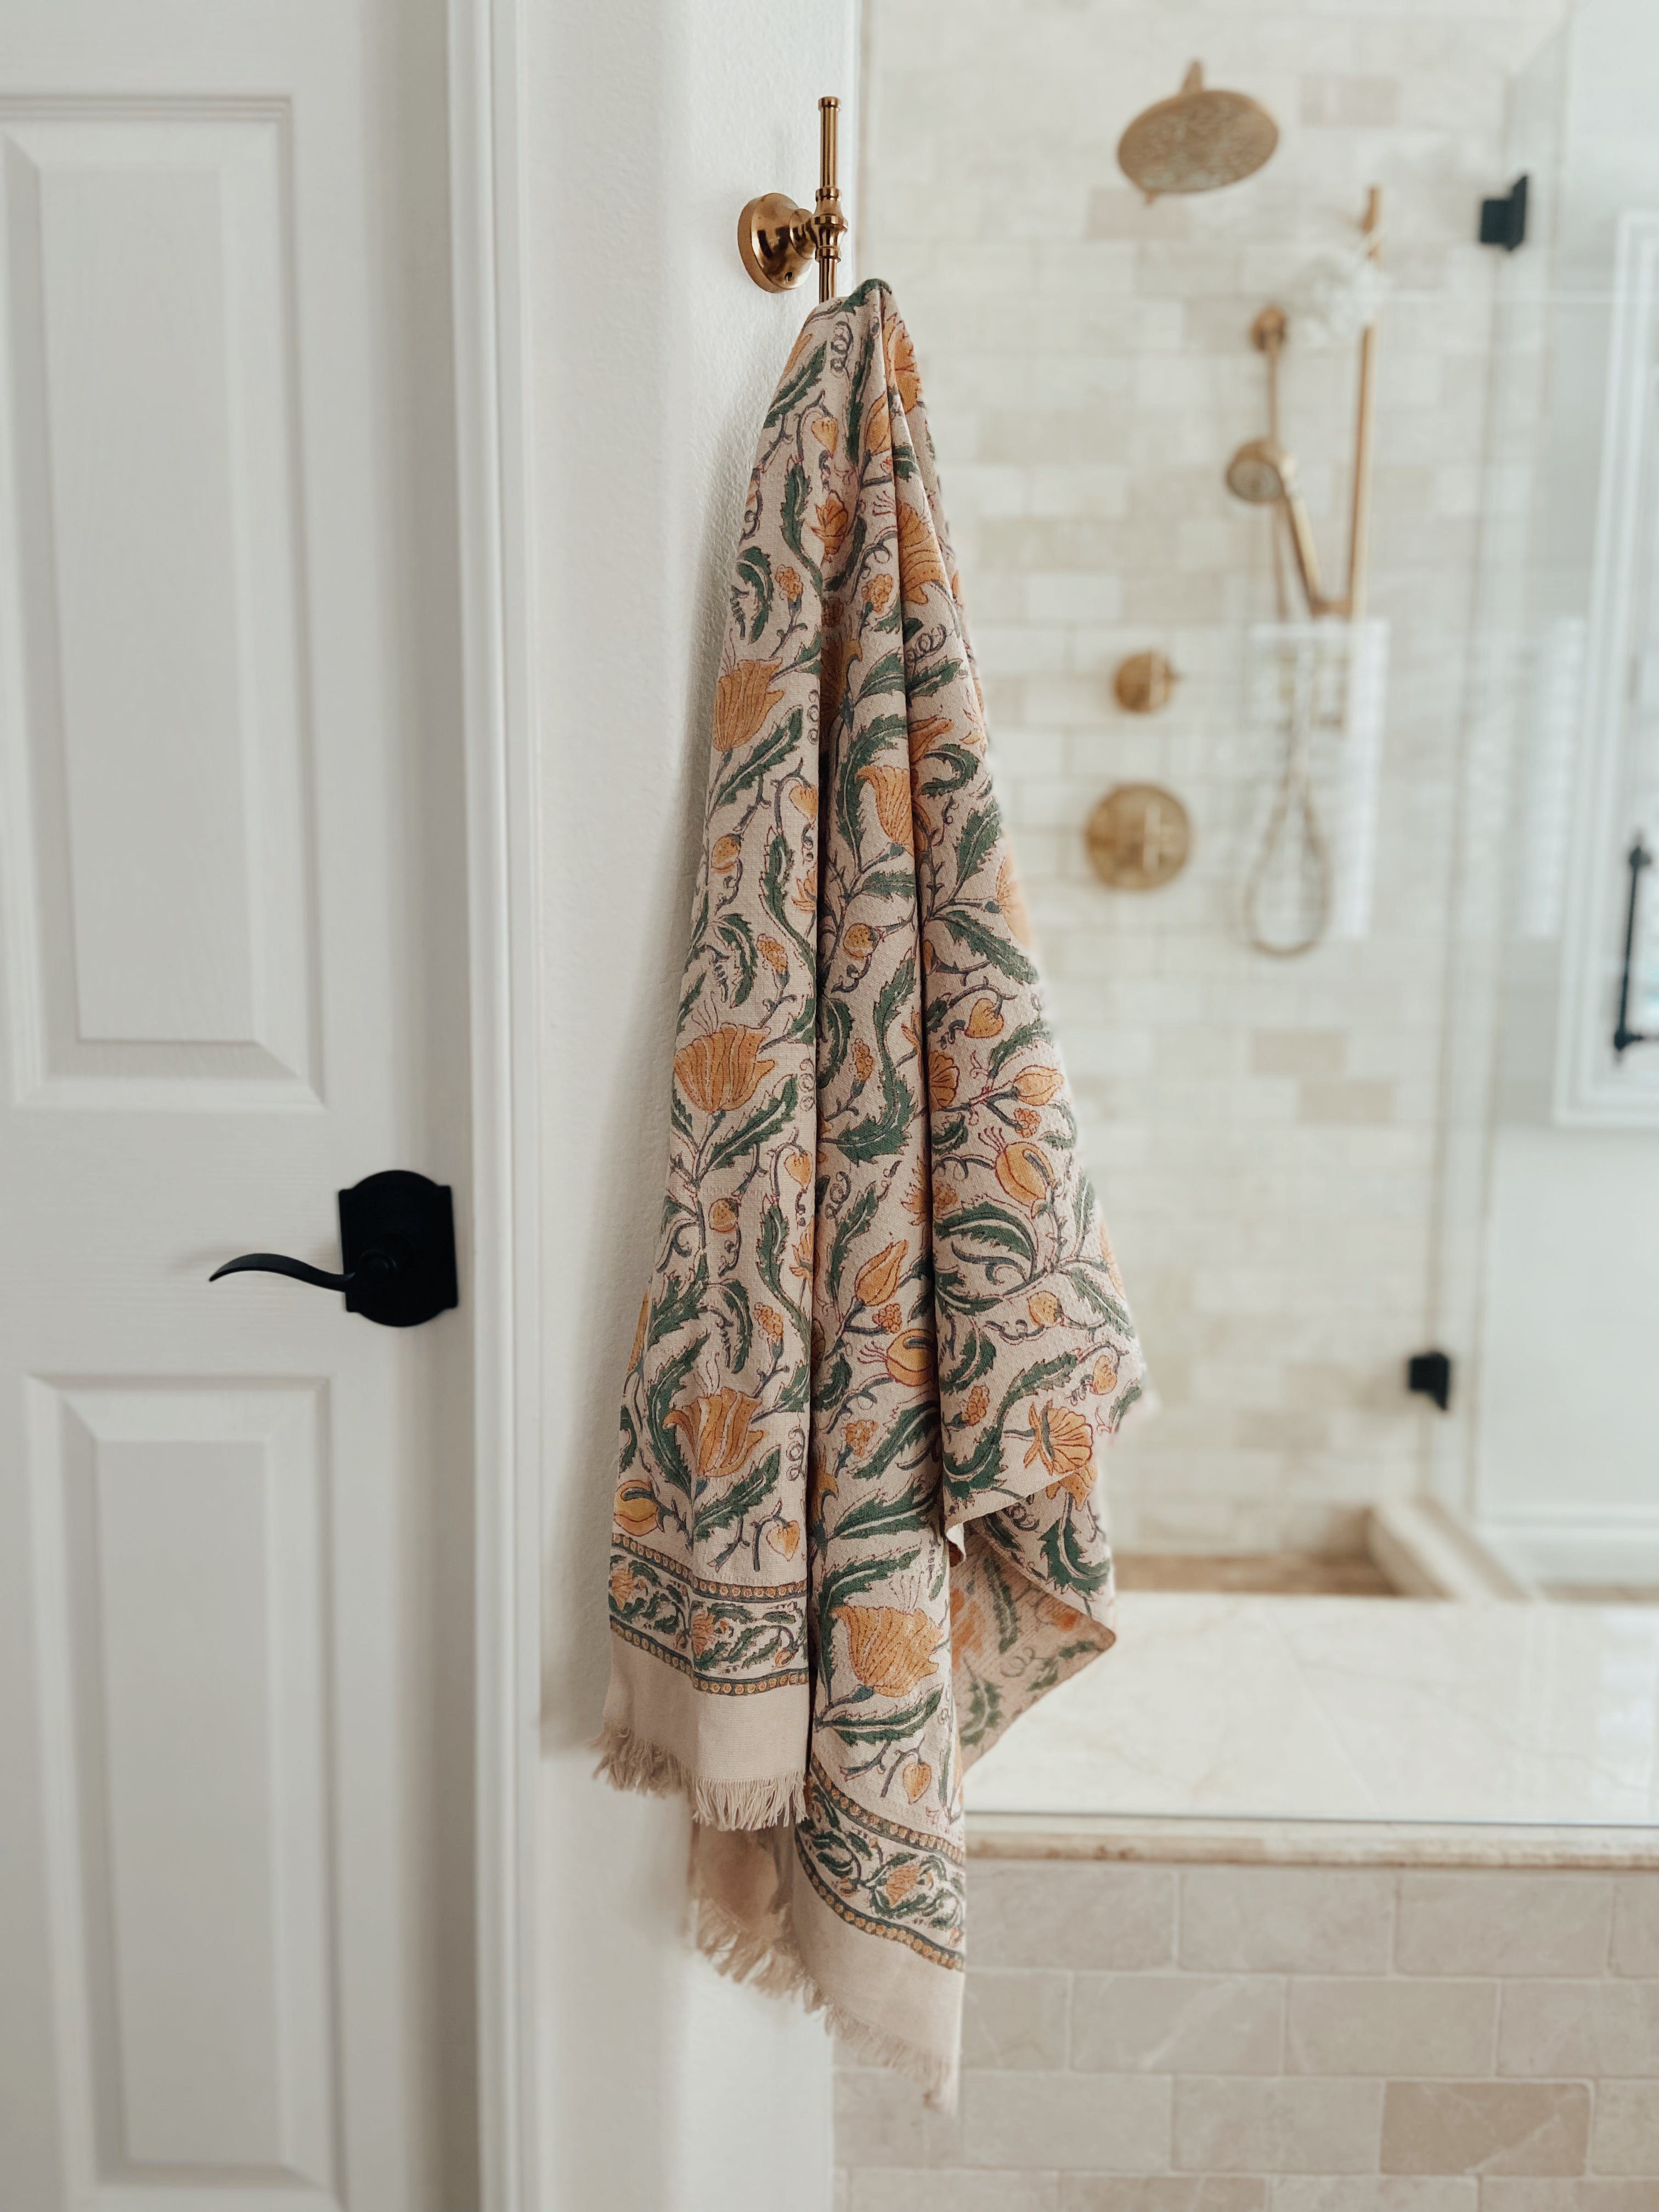 Tuscan bath towel hanging on rod in the bathroom